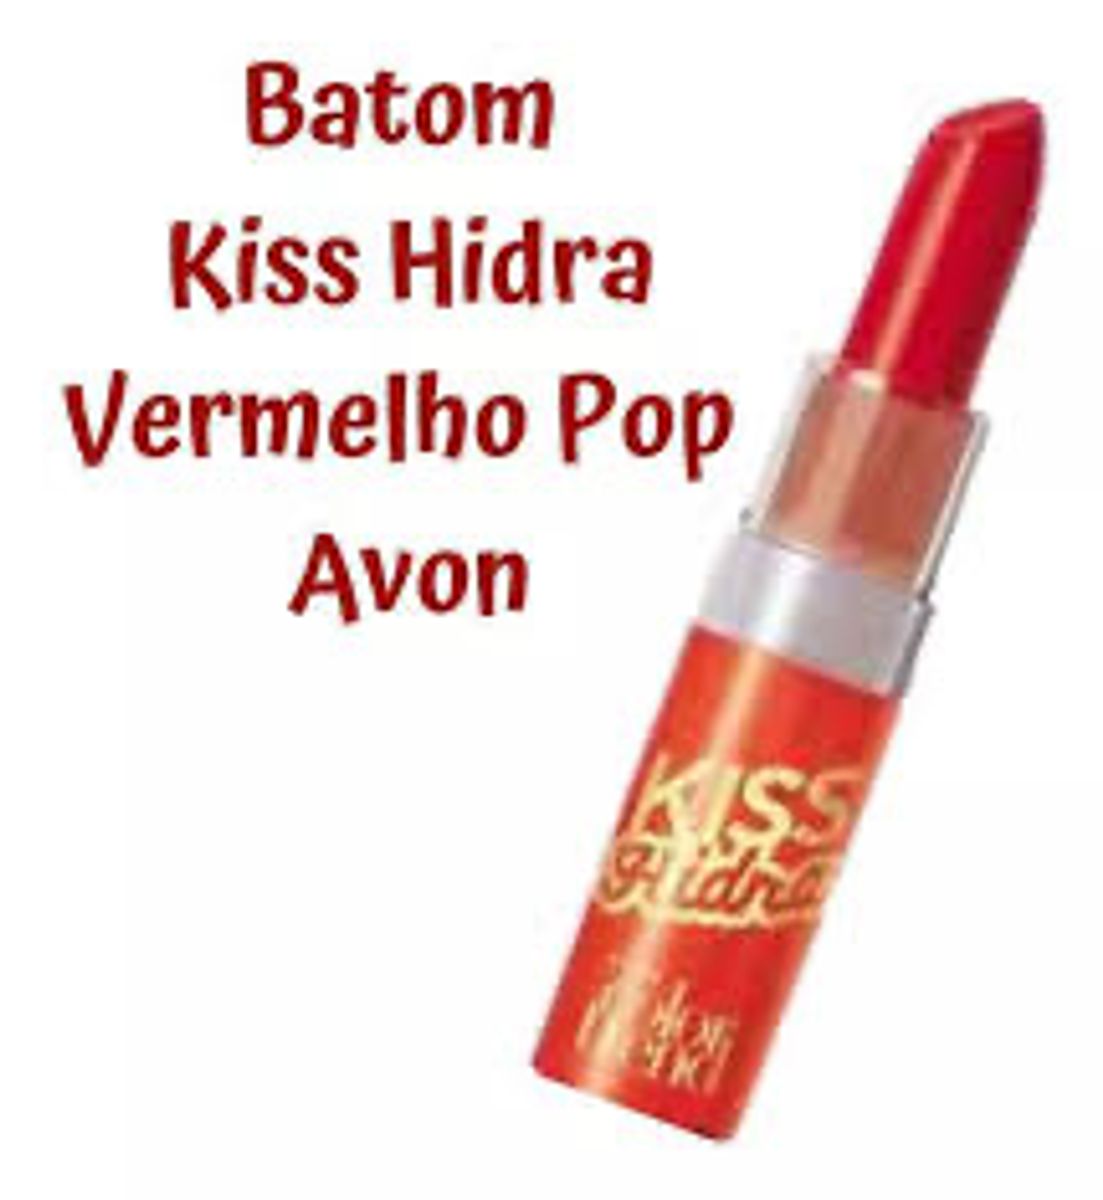 Batom kiss hidra Avon